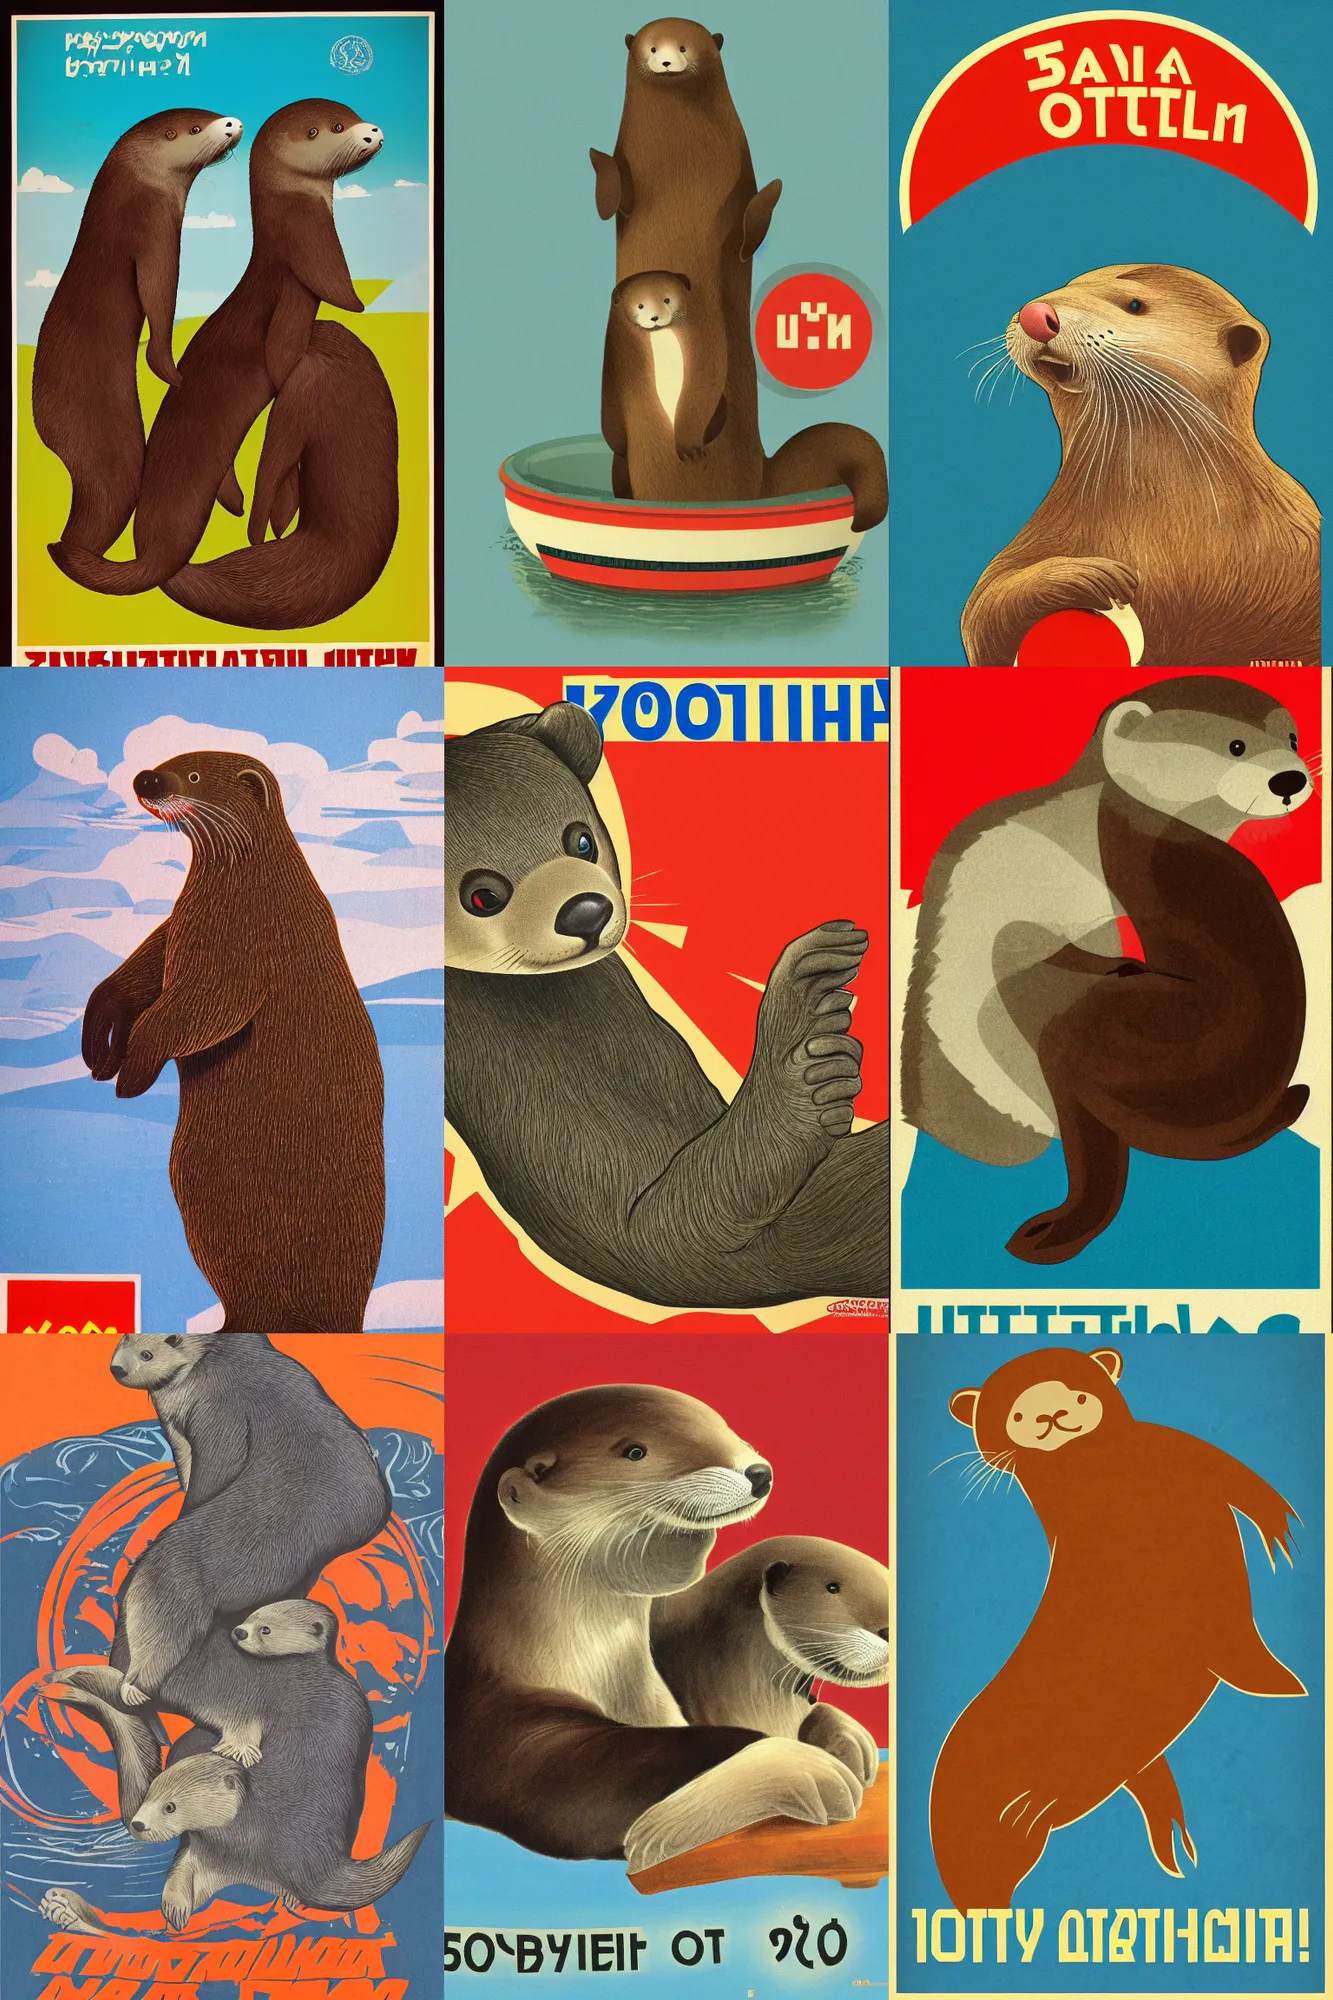 Prompt: Soviet utopian otter propaganda poster. 8k resolution, extremely detailed.